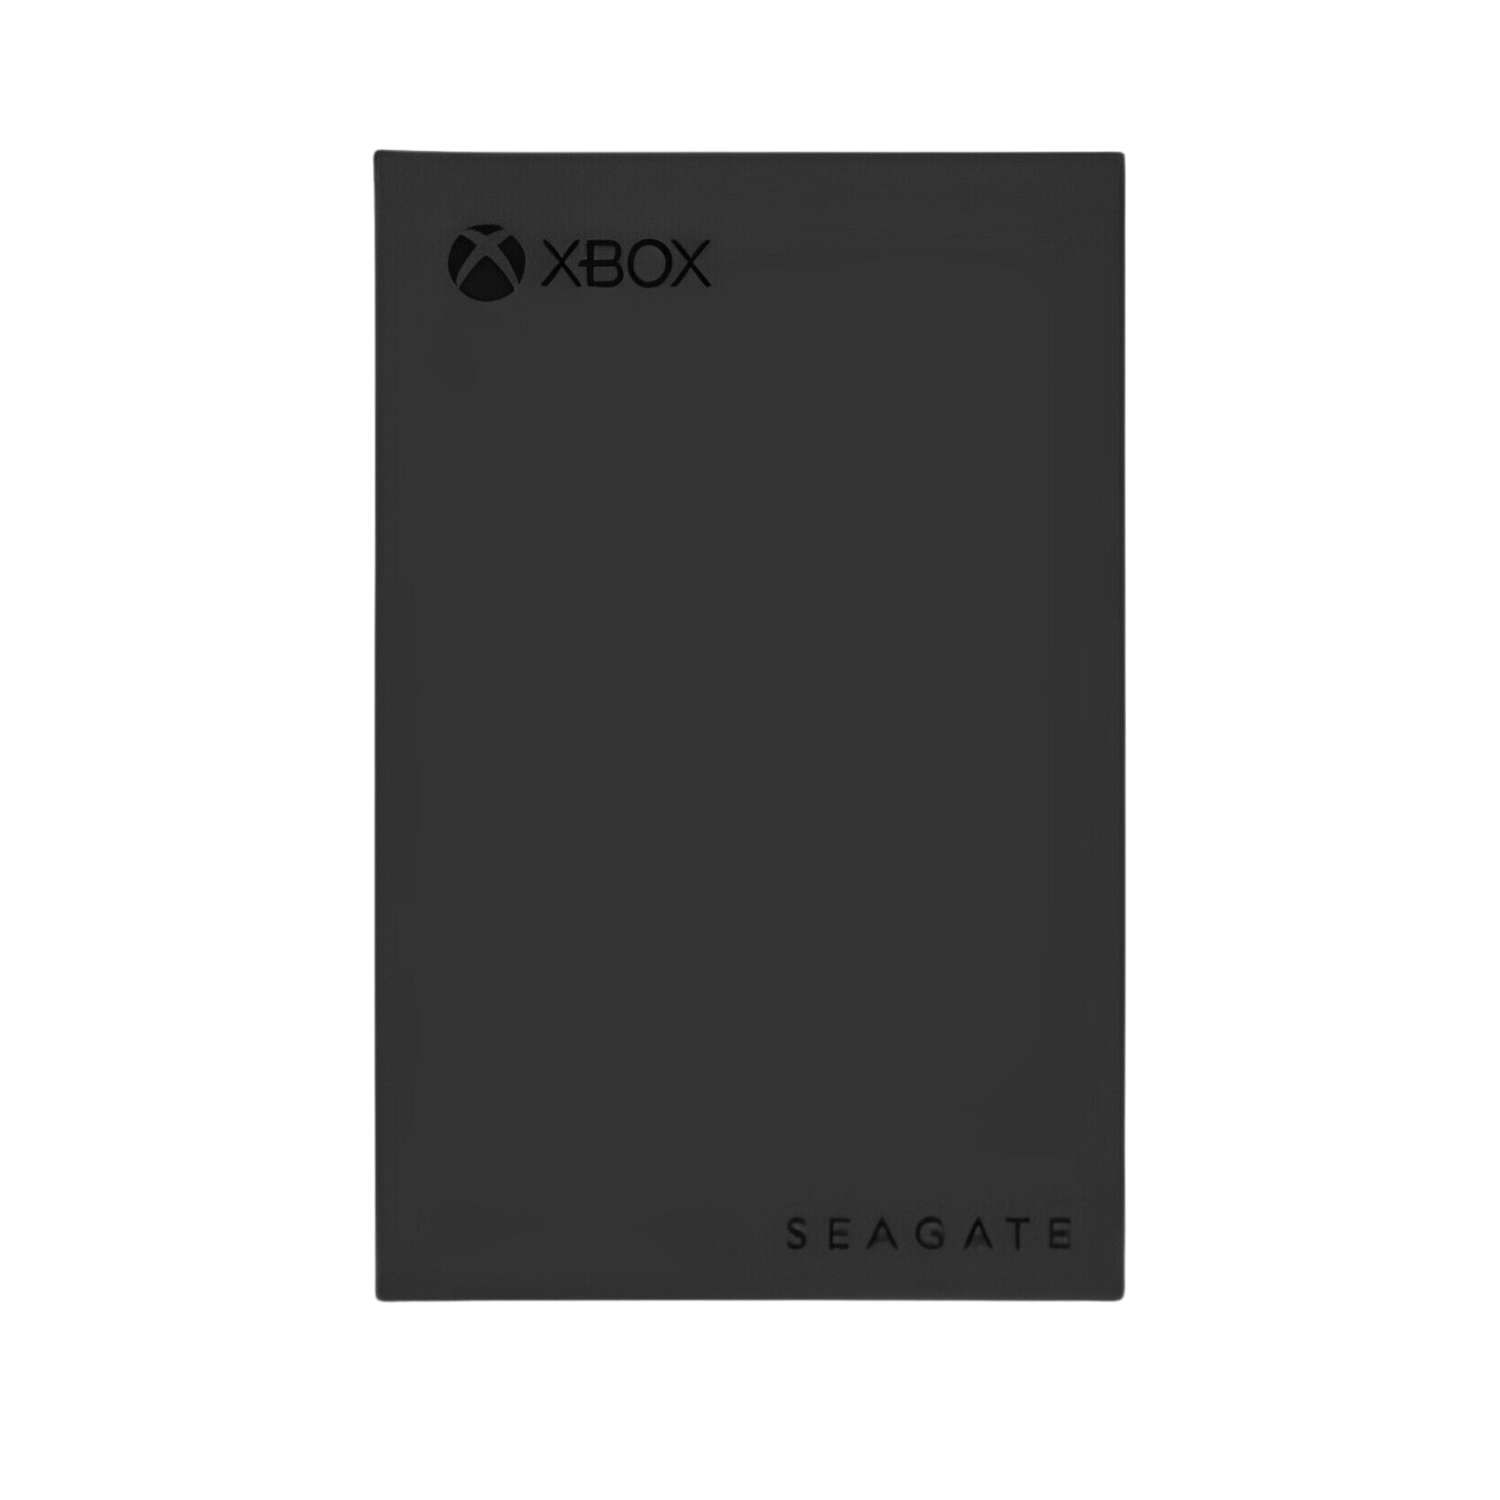 Refurbished (Good) - Seagate Game Drive 2.5 For Xbox 2TB USB 3.0 External Hard Drive STKX2000400, Certified Refurbished